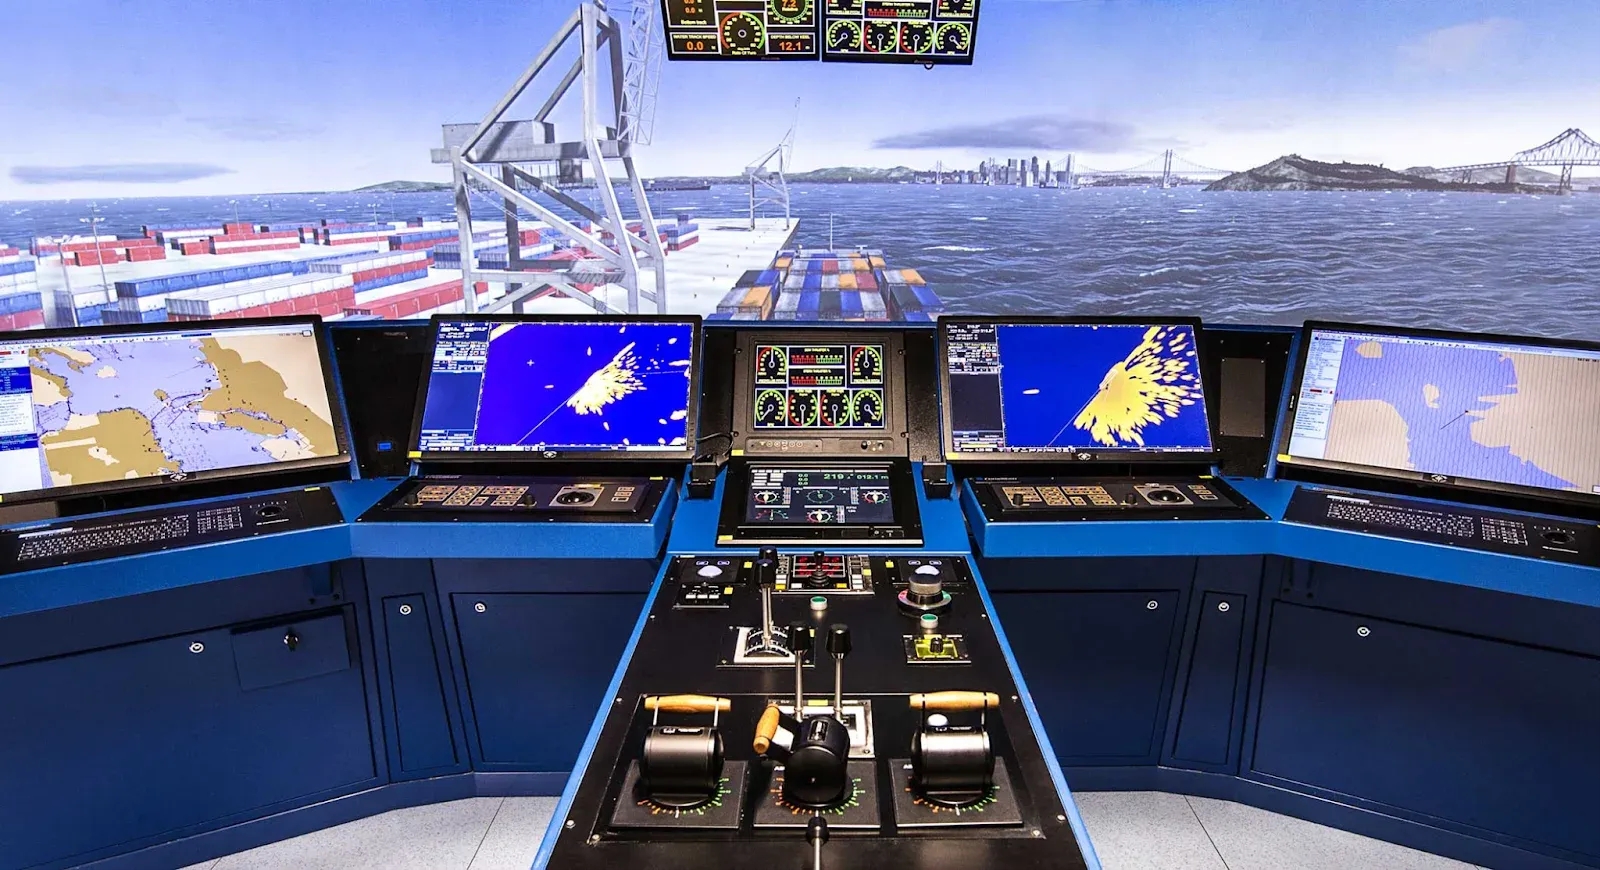 Simulator for navigation training